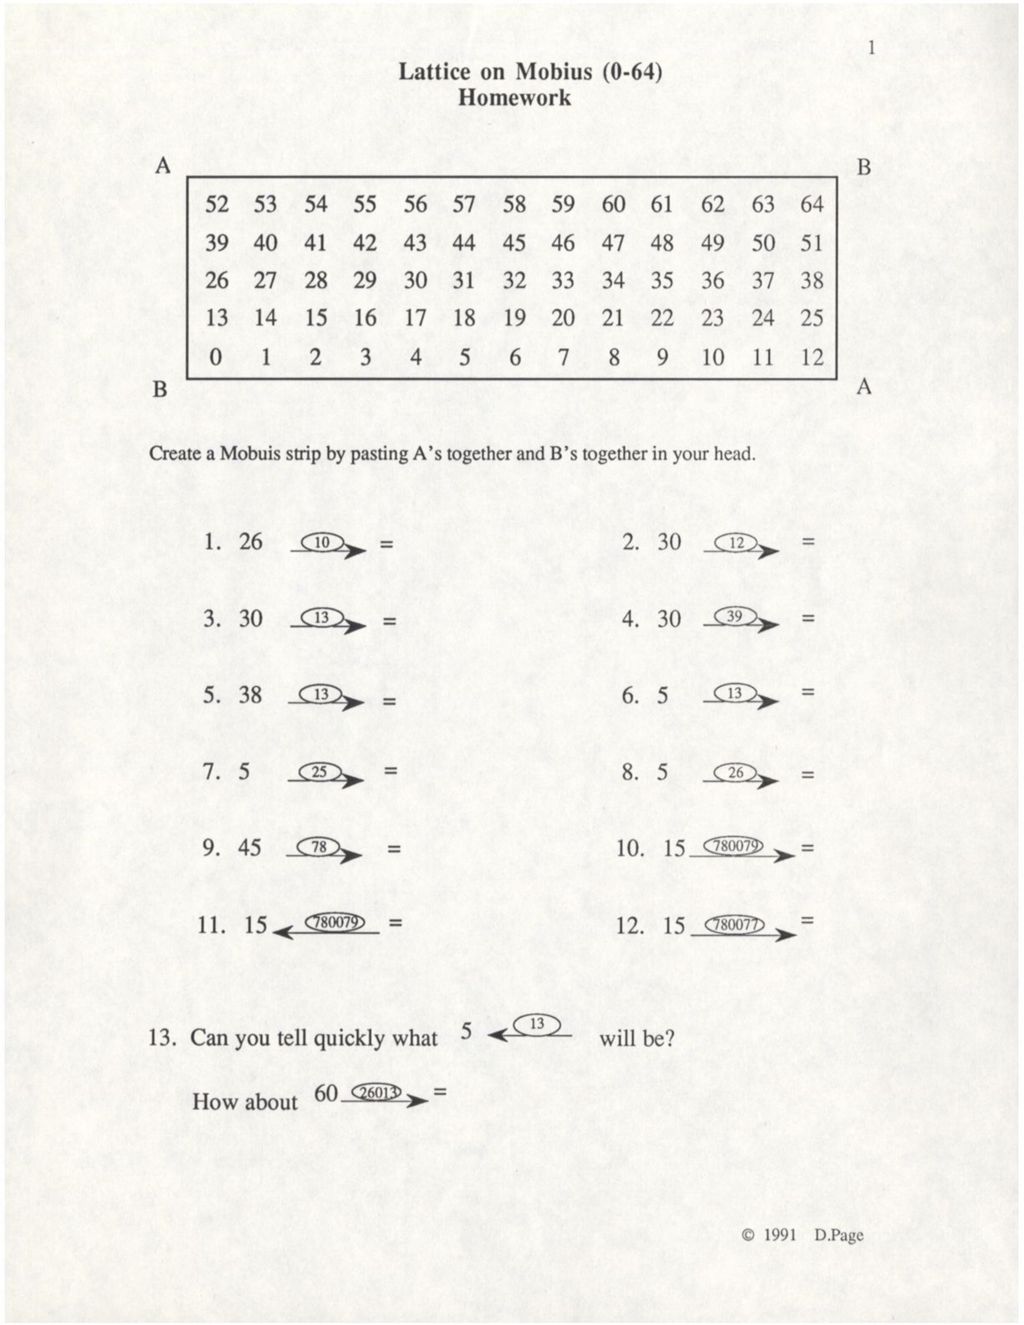 Miniature of Lattice on Mobius (0-64) Homework w/ Answer Key (1991)